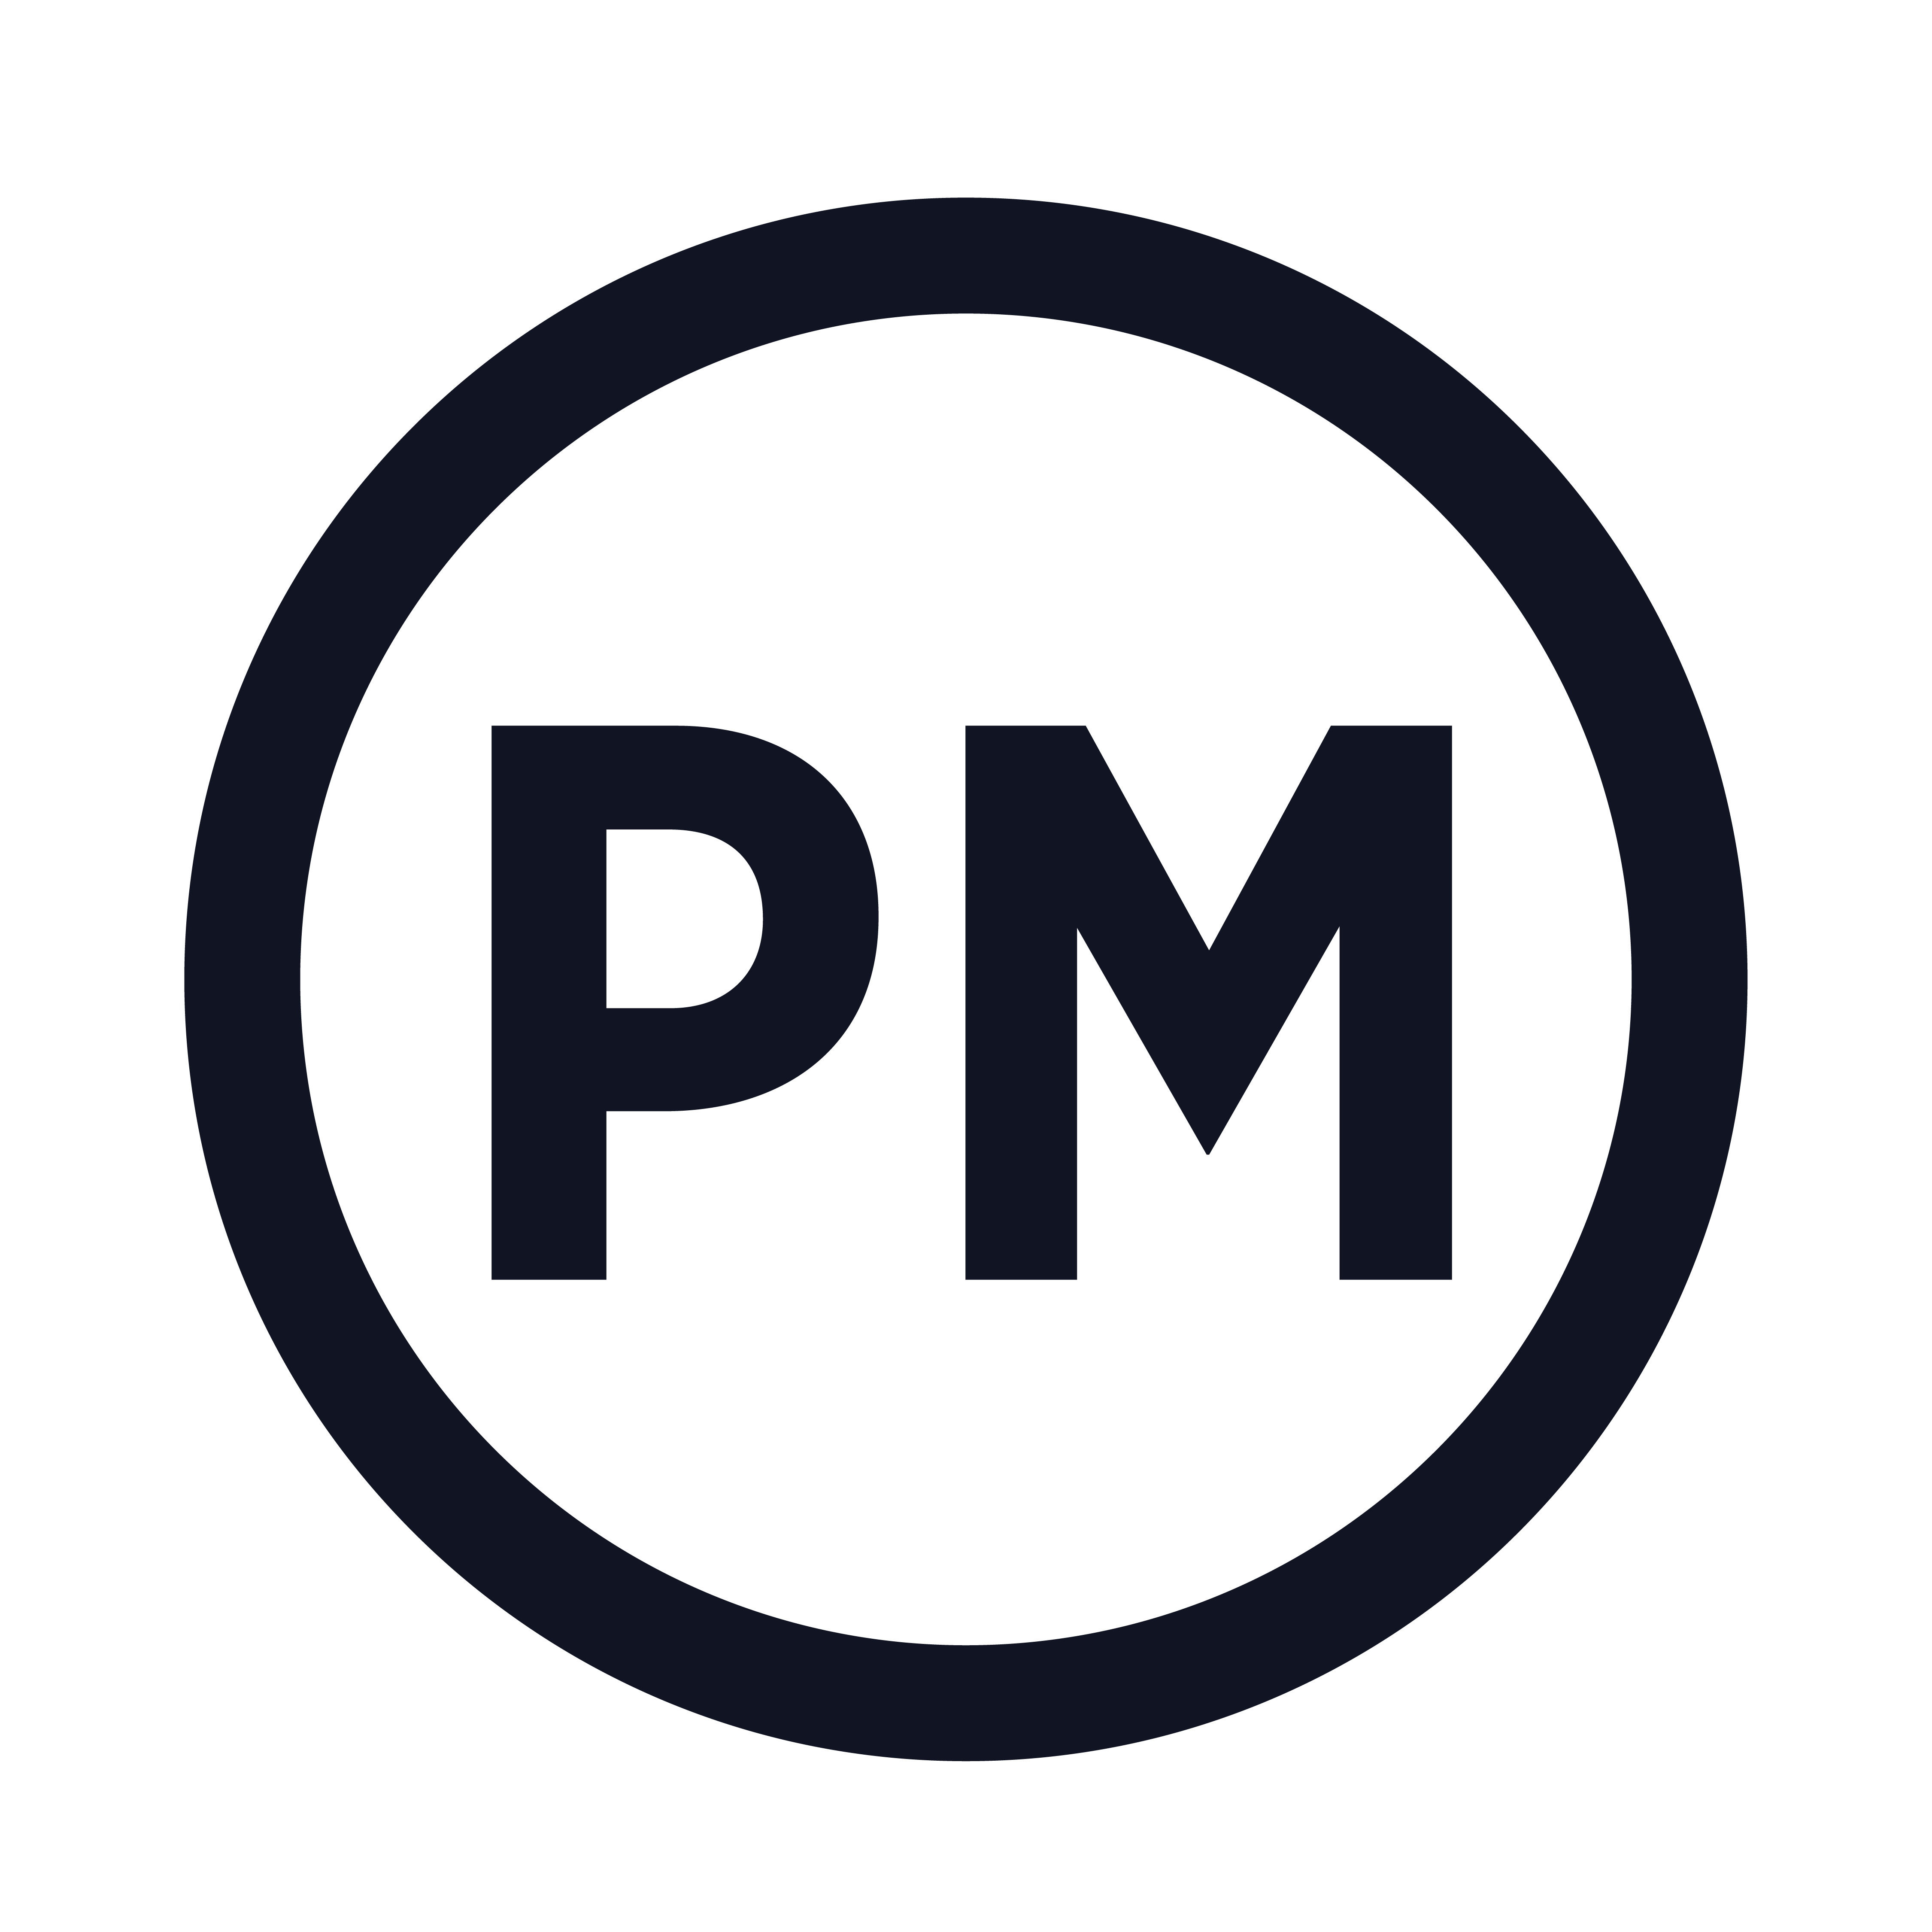 ProjectManager.com Logo